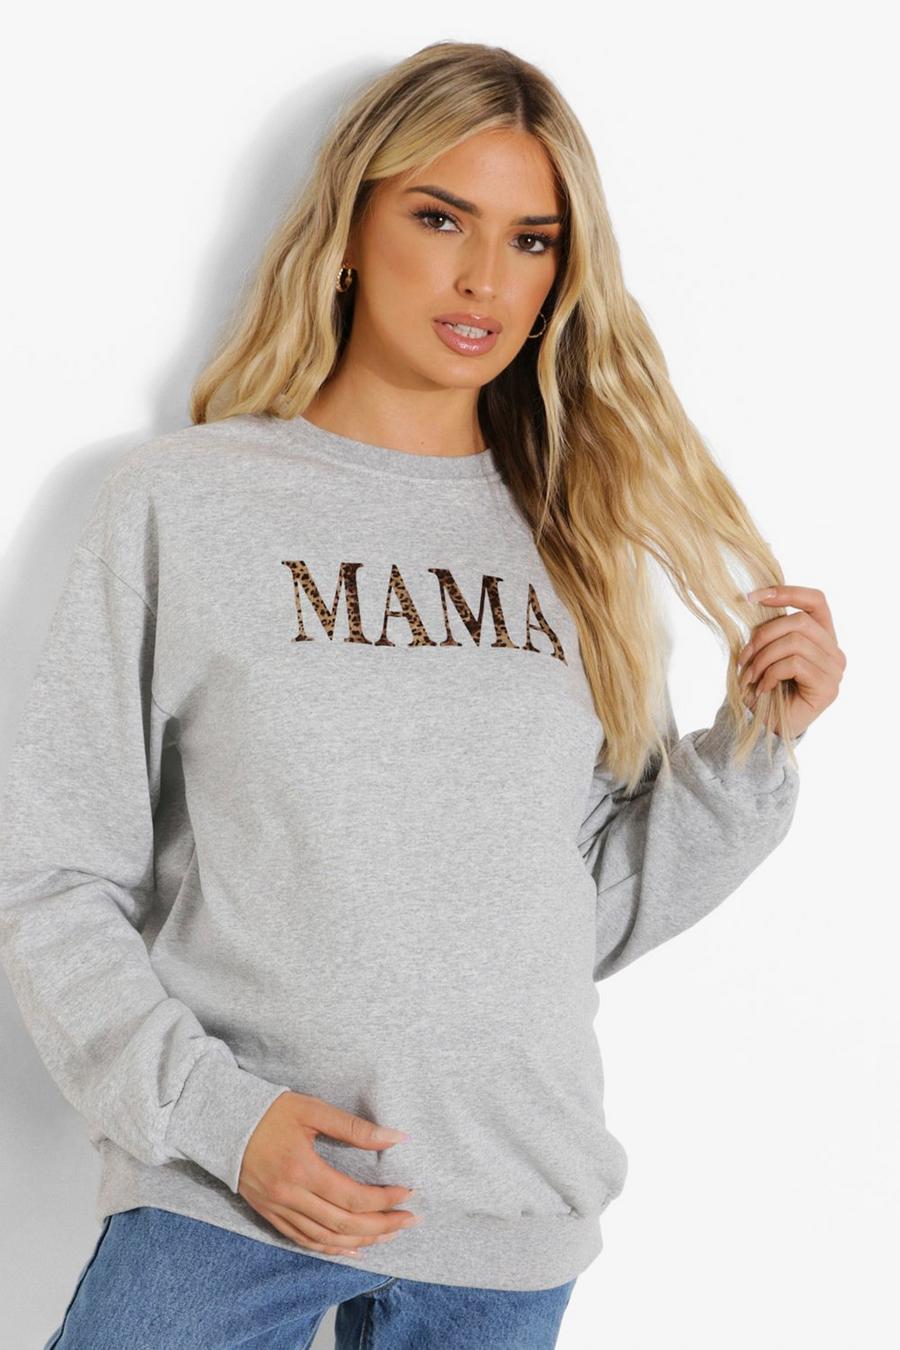 Maternité - Sweat avec inscription 'Mama' en motif léopard, Grey marl grau